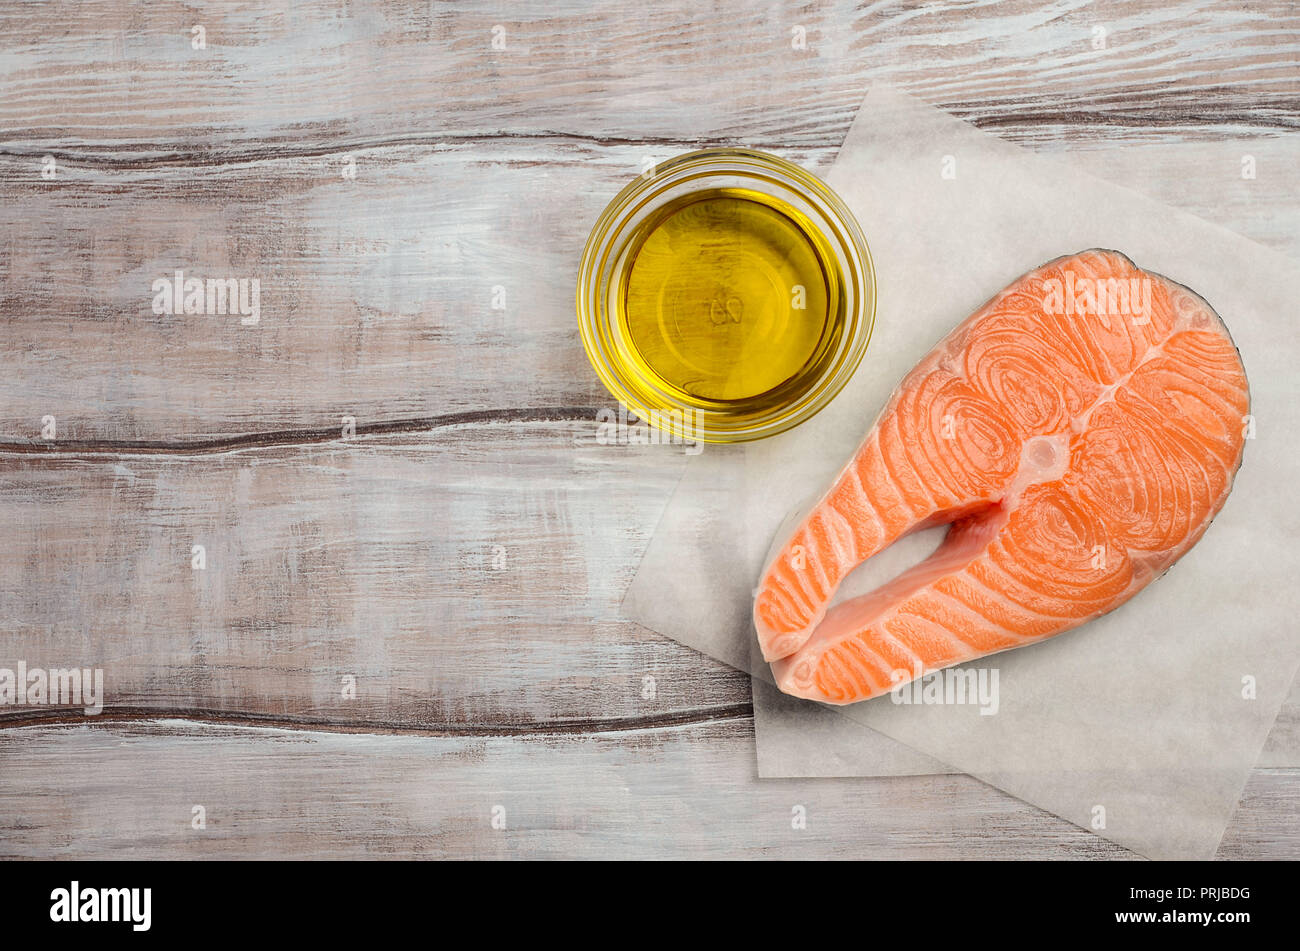 Filete de salmón fresca cruda con aceite de oliva, listo para cocinar. Concepto de dieta saludable. Foto de stock